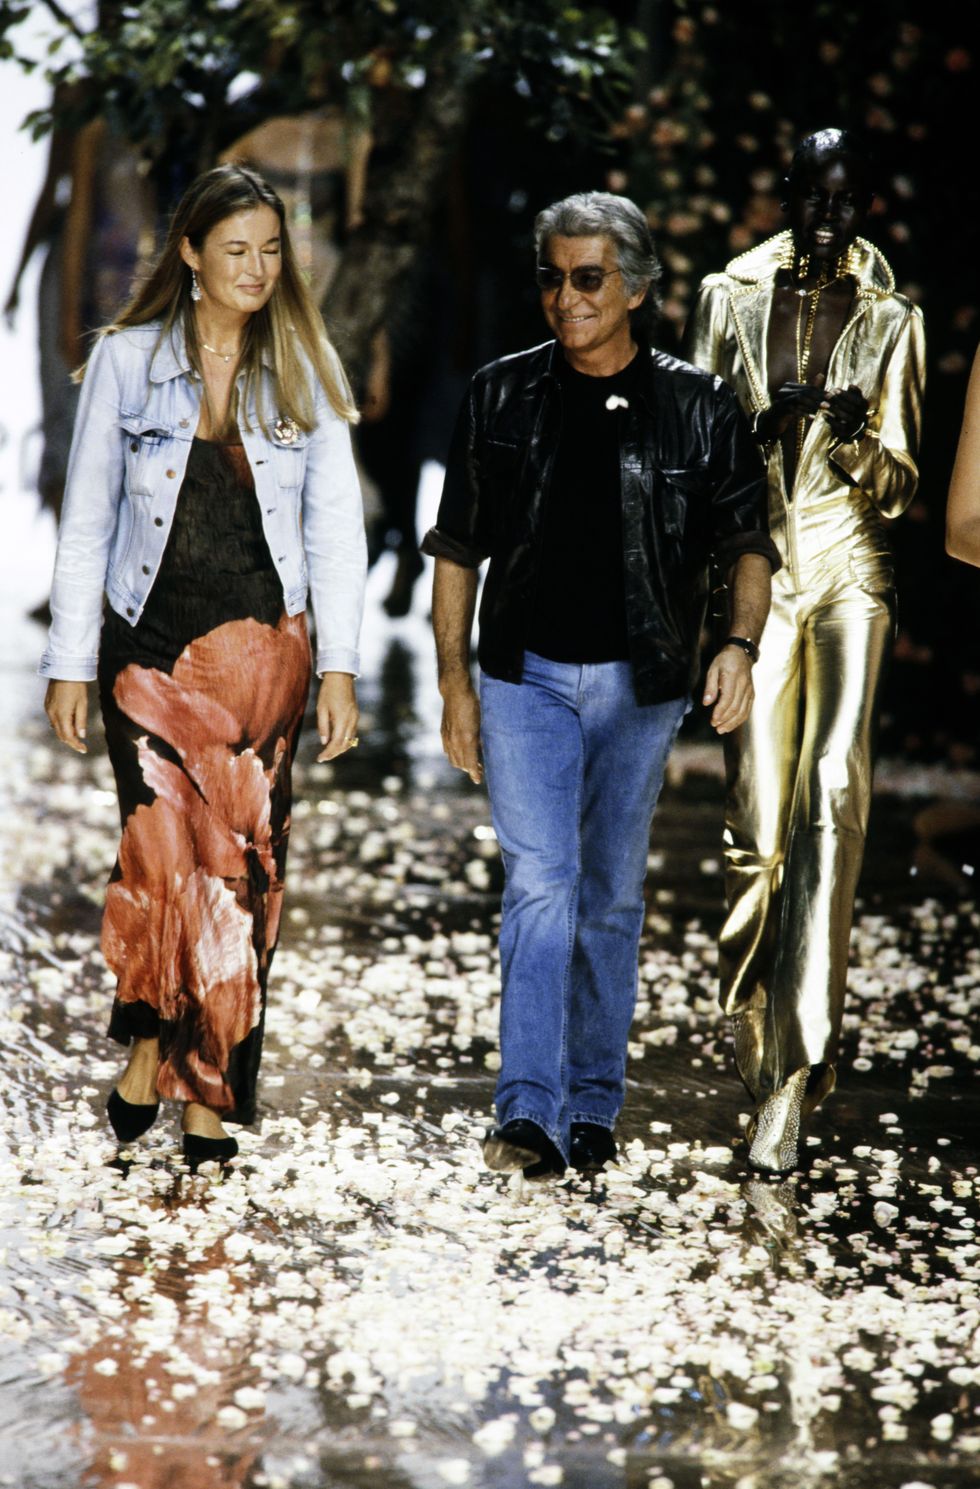 designer roberto cavalli walks the runway at show finale with wife eva cavalli and model alek wek photo by mauricio mirandapenske media via getty images